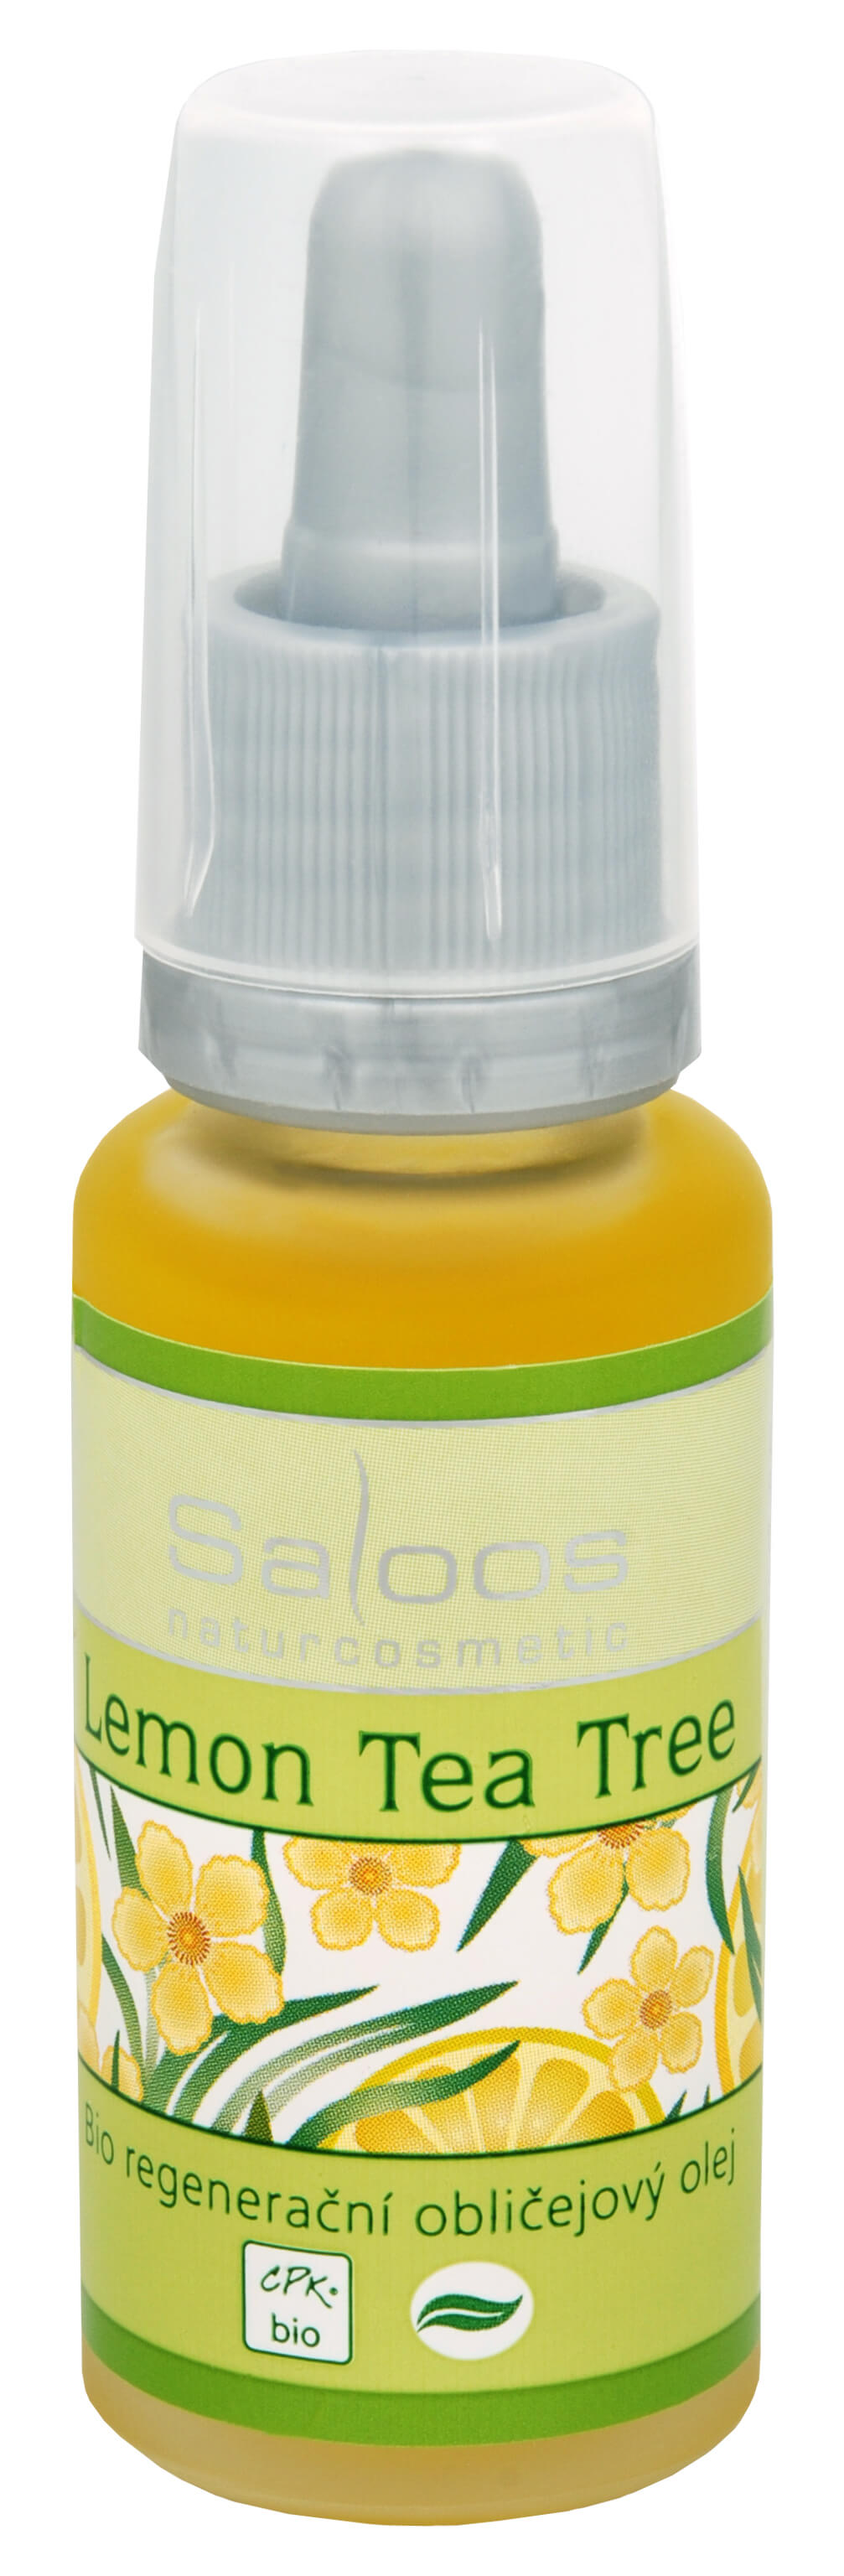 Zobrazit detail výrobku Saloos Bio regenerační obličejový olej - Lemon tea tree 20 ml